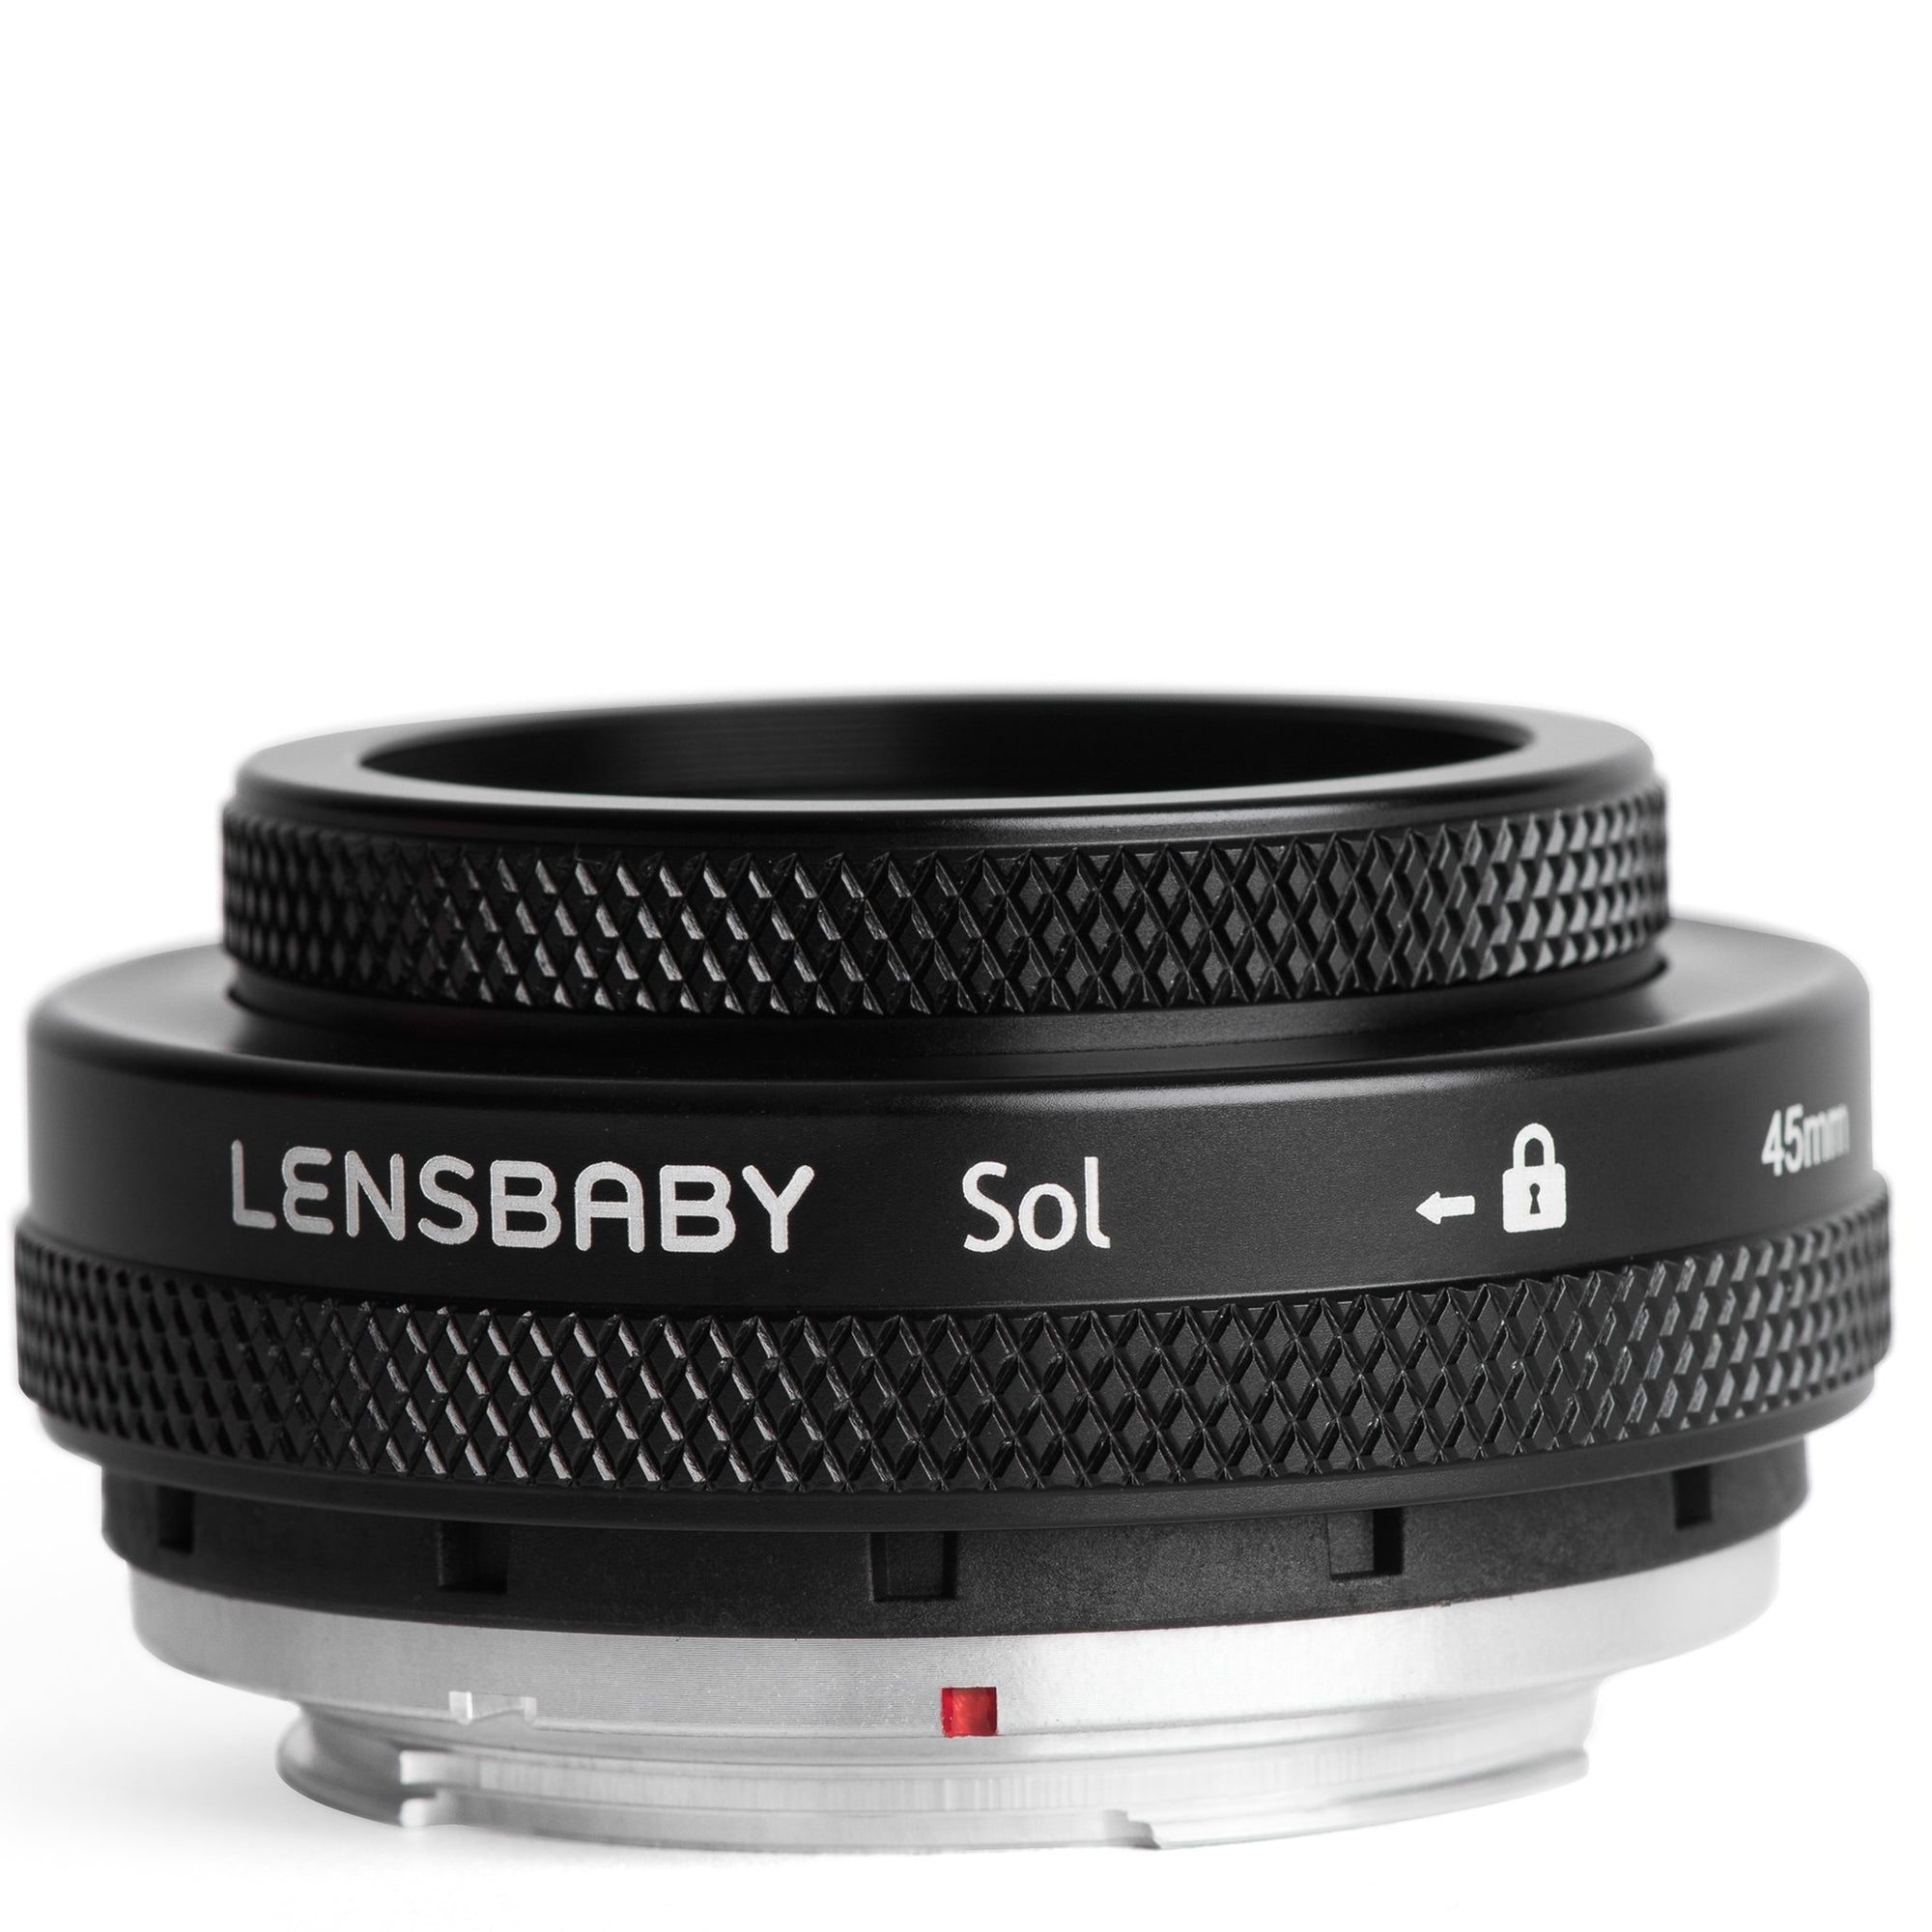 Sol 45-Lensbaby